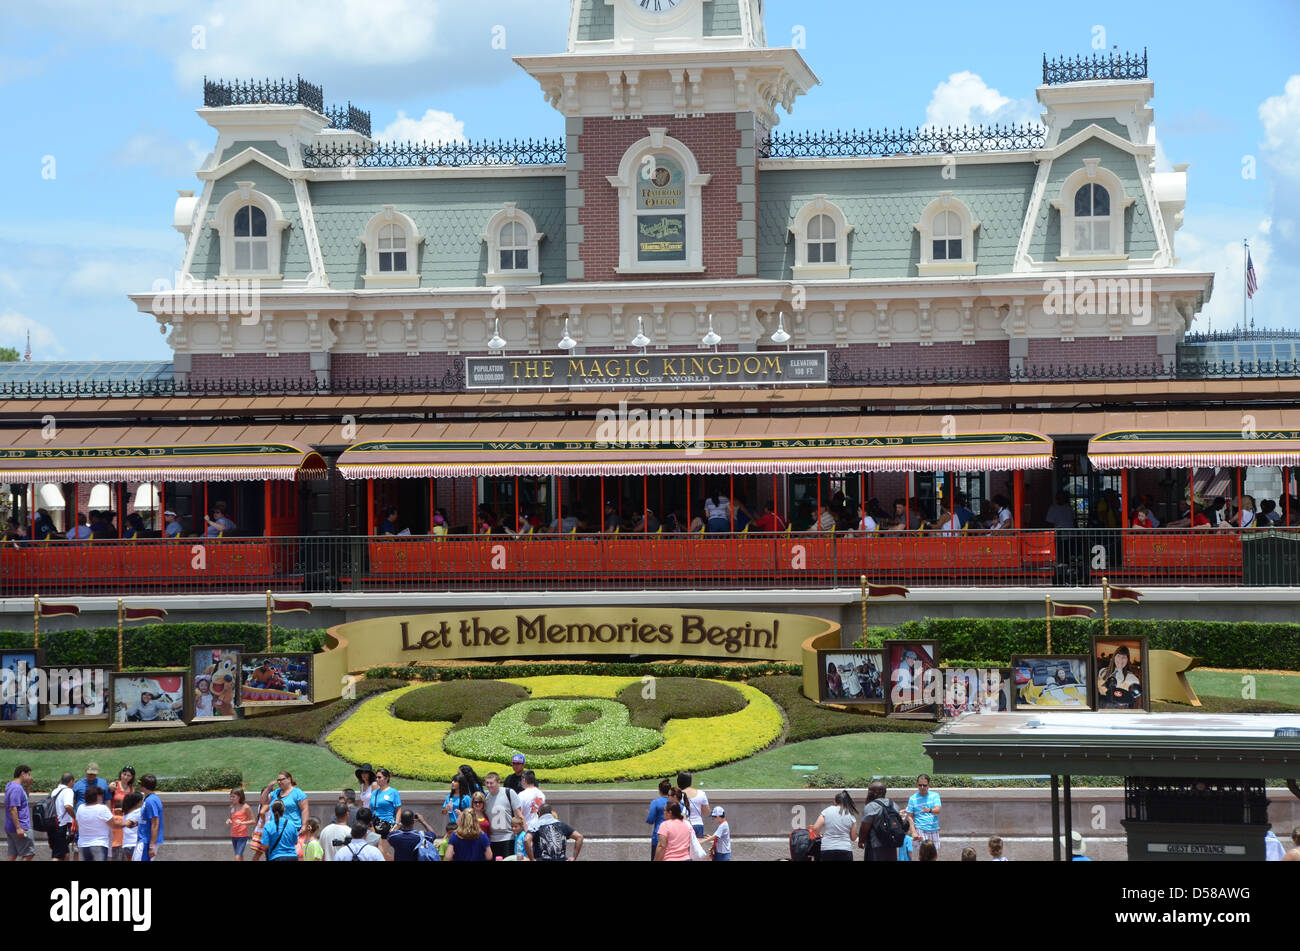 Entrance to Disney's Magic Kingdom Orlando Florida Stock Photo